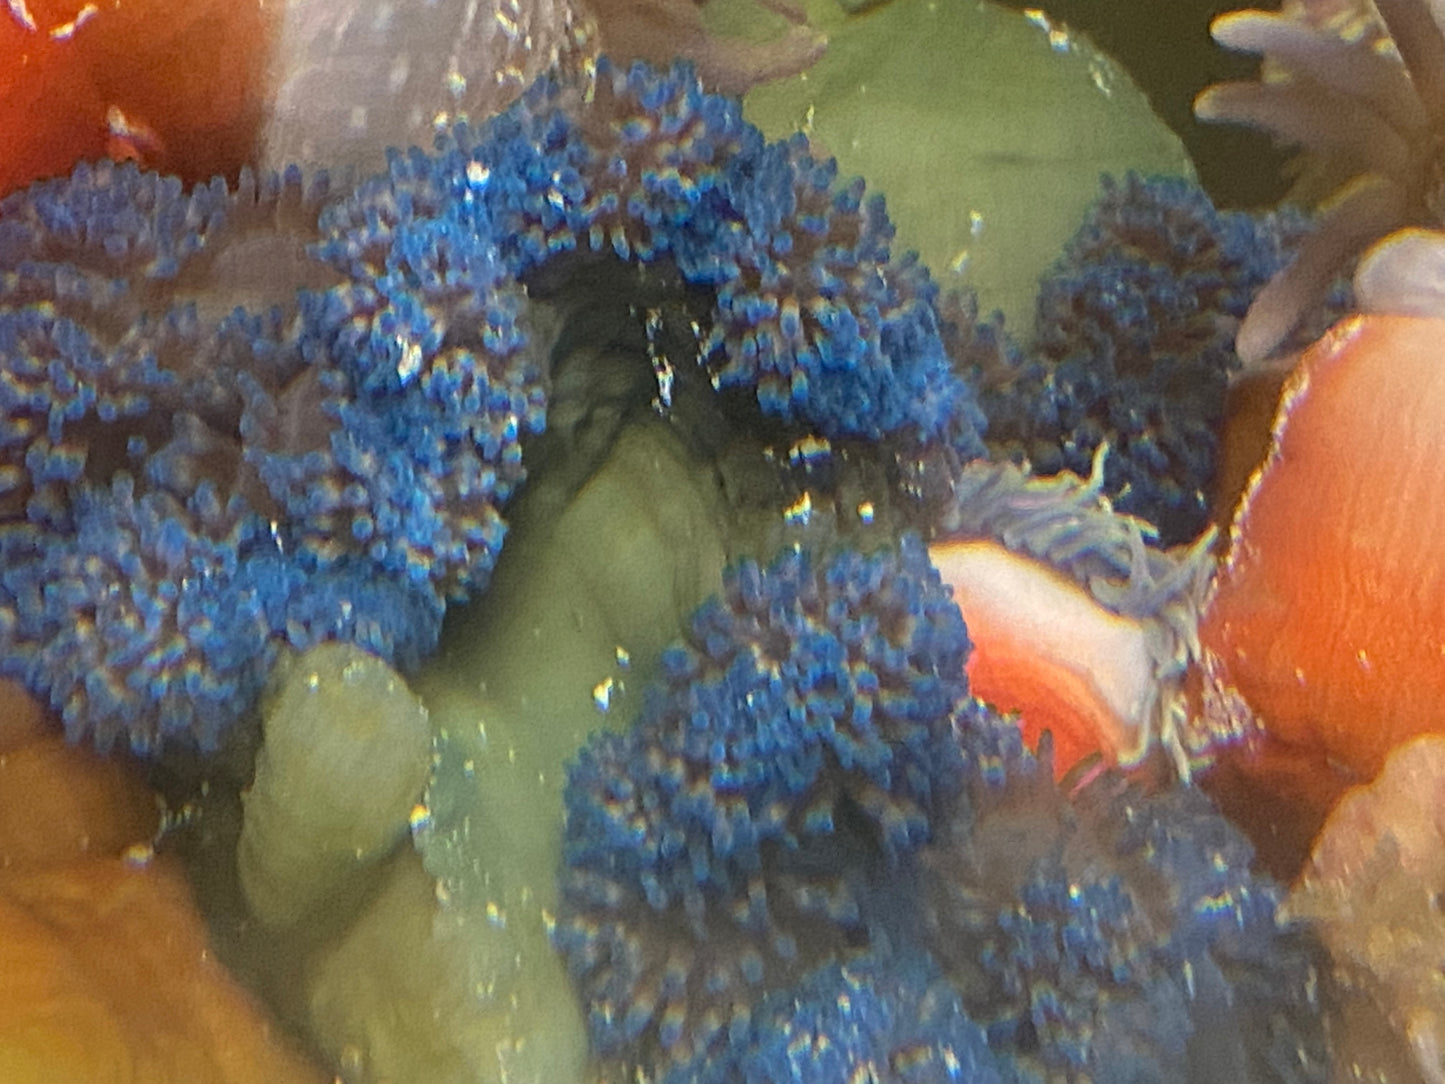 Blue Carpet Anemone